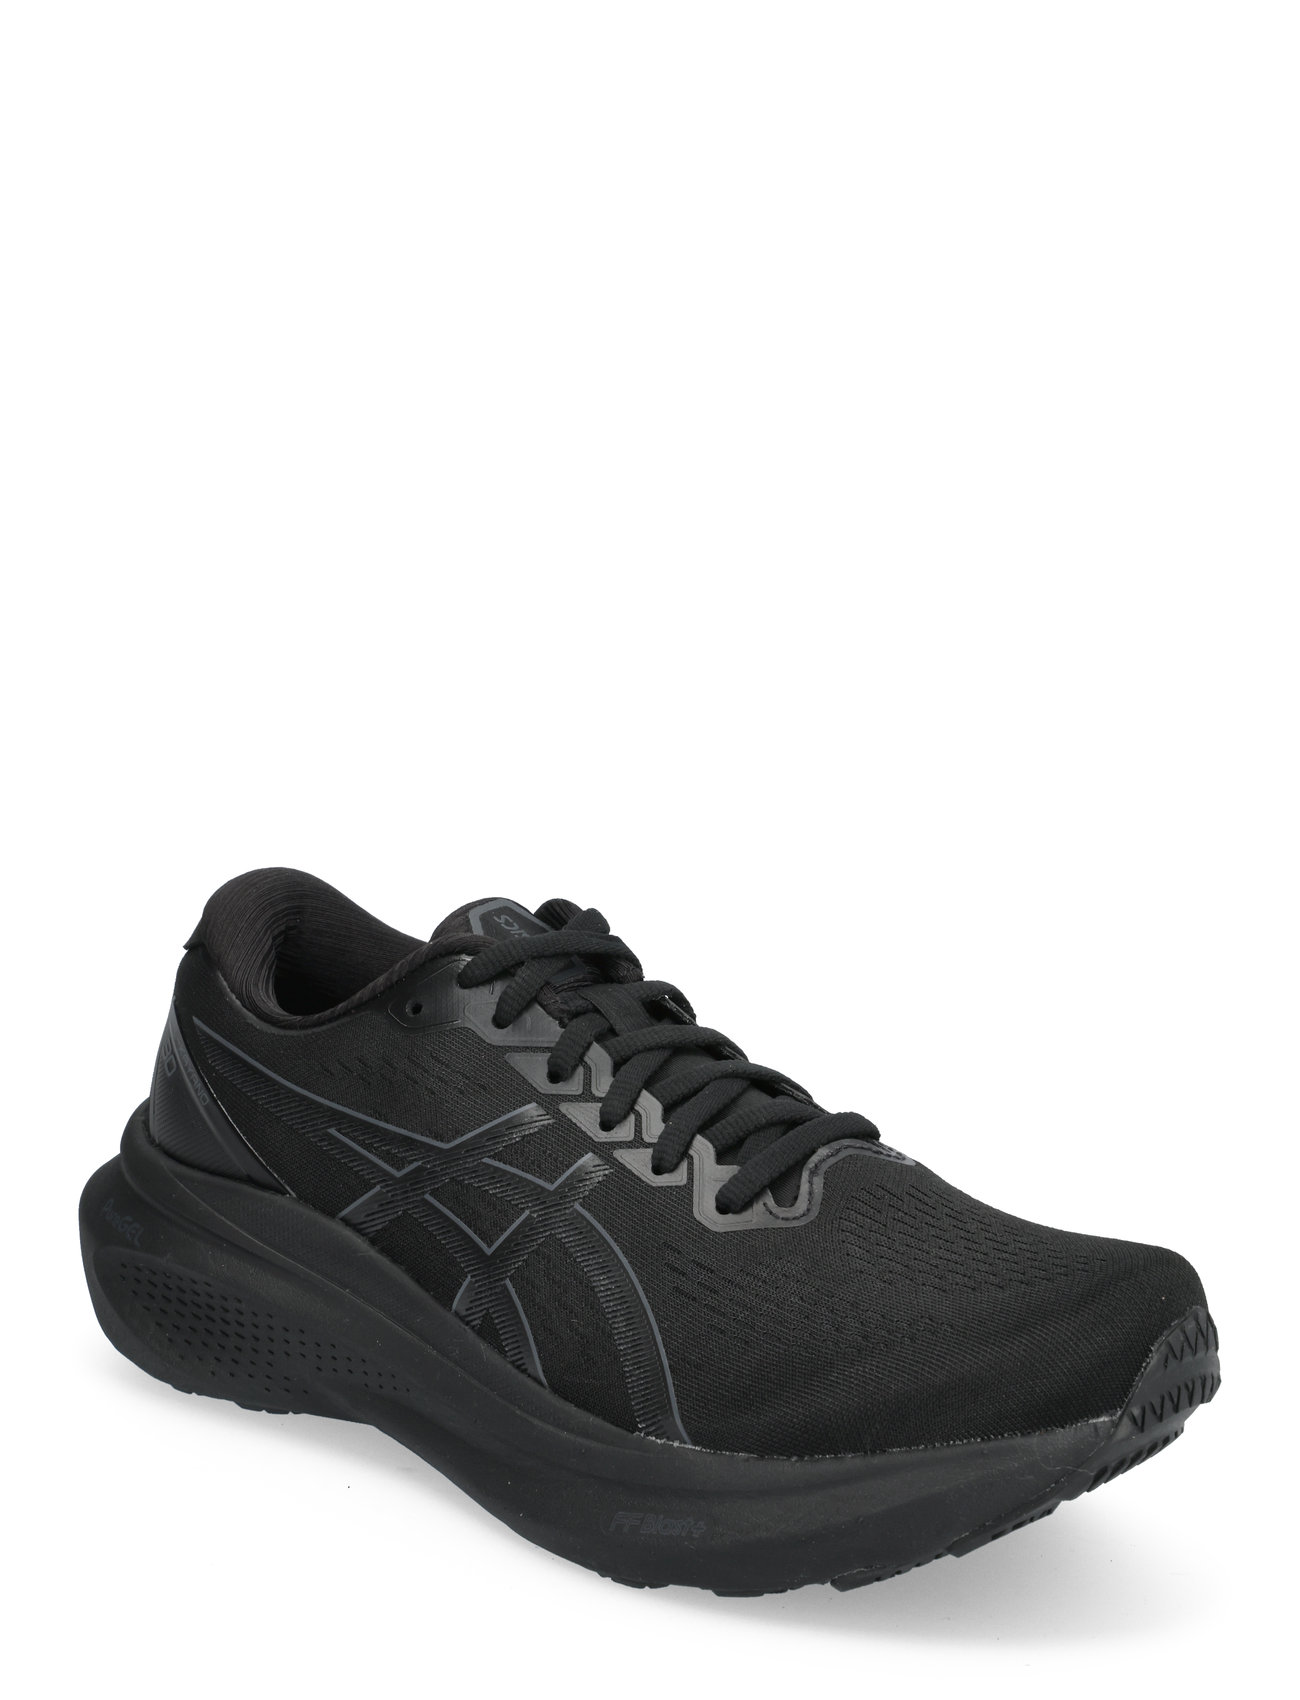 Gel-Kayano 30 Sport Sport Shoes Running Shoes Black Asics